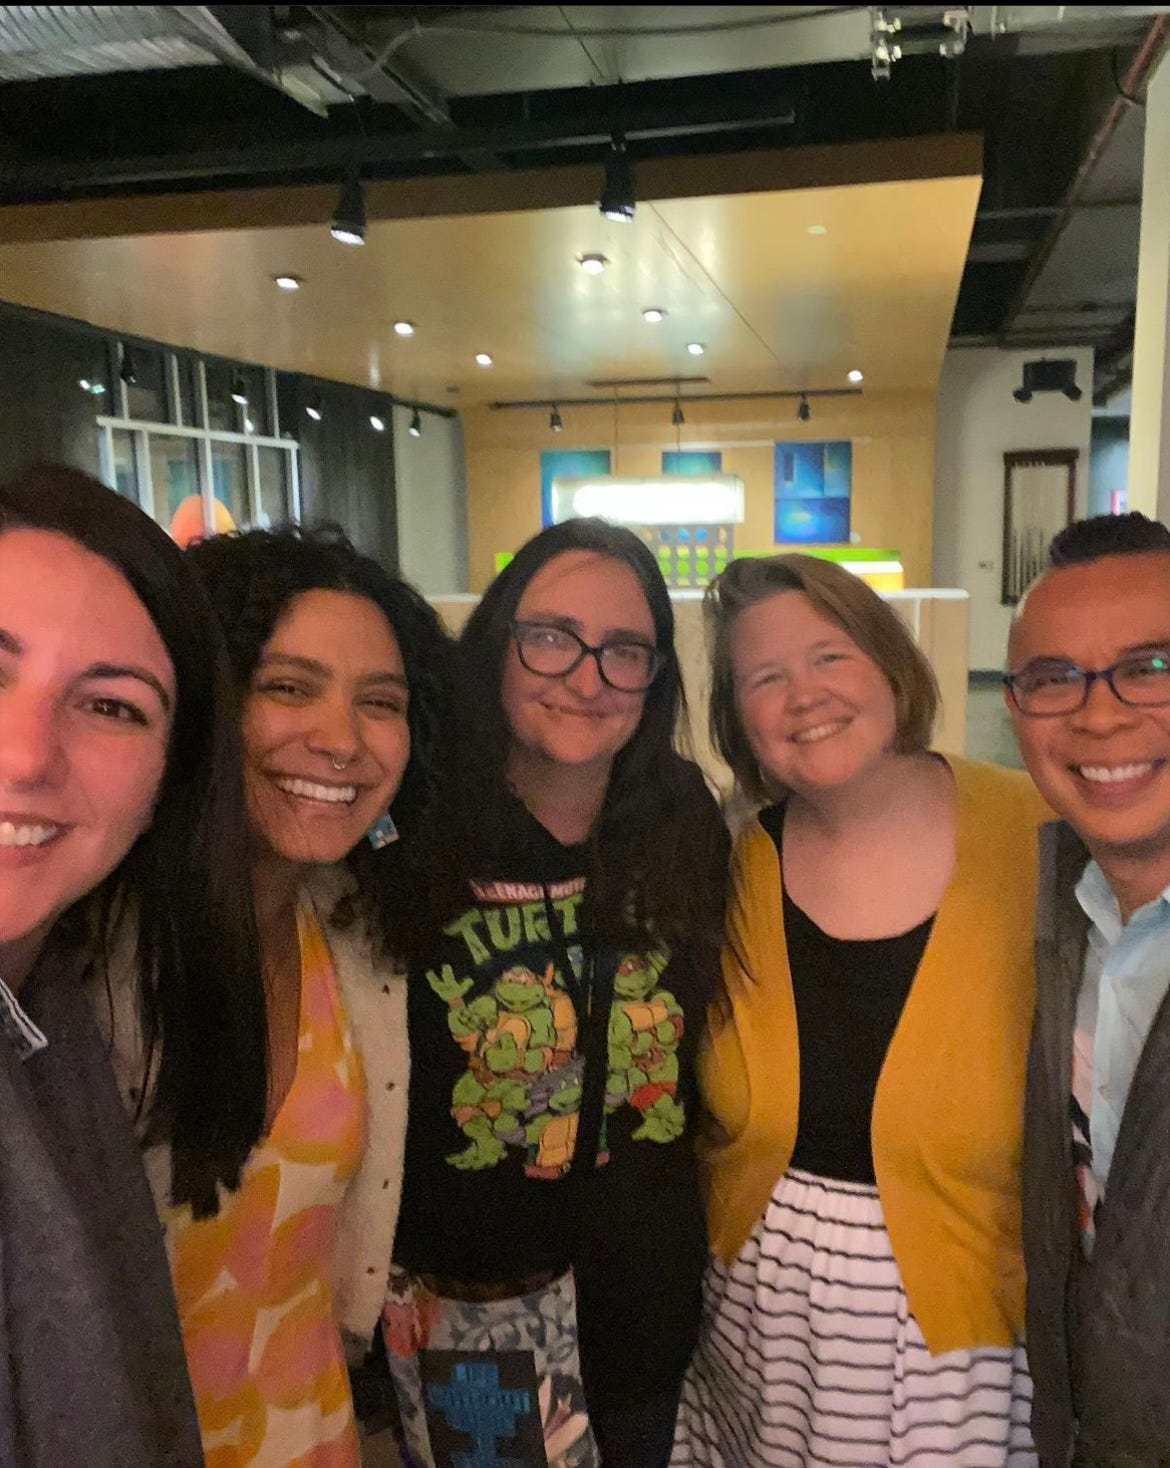 Selfie taken by Jo Segura of Jo Segura, Rachel Runya Katz, Alicia Thompson, Anita Kelly, and Dominic Lim in the lobby of the hotel